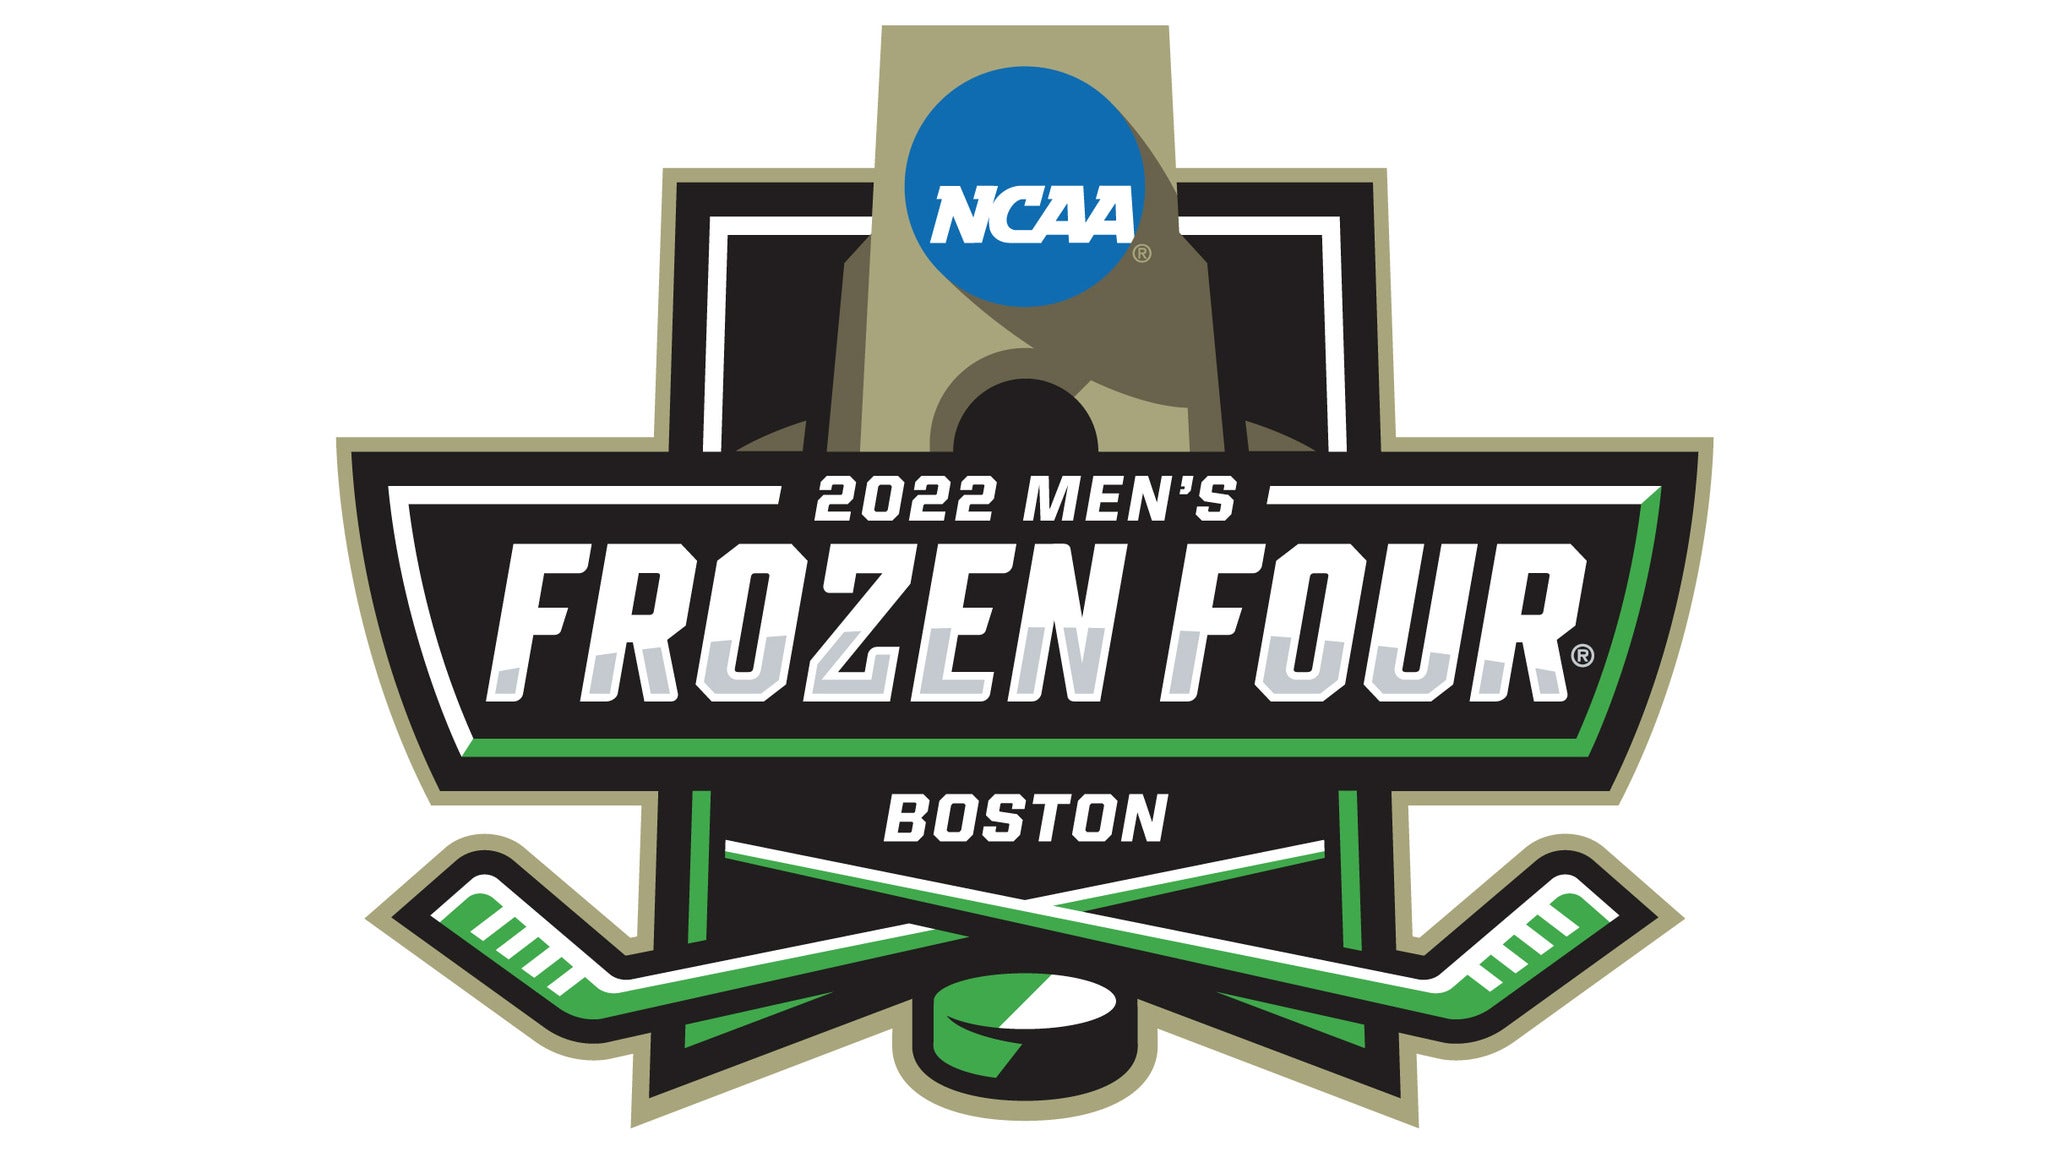 2022 NCAA Division I Men's Frozen Four - Semifinals in Boston promo photo for TD Garden Insiders Promo presale offer code